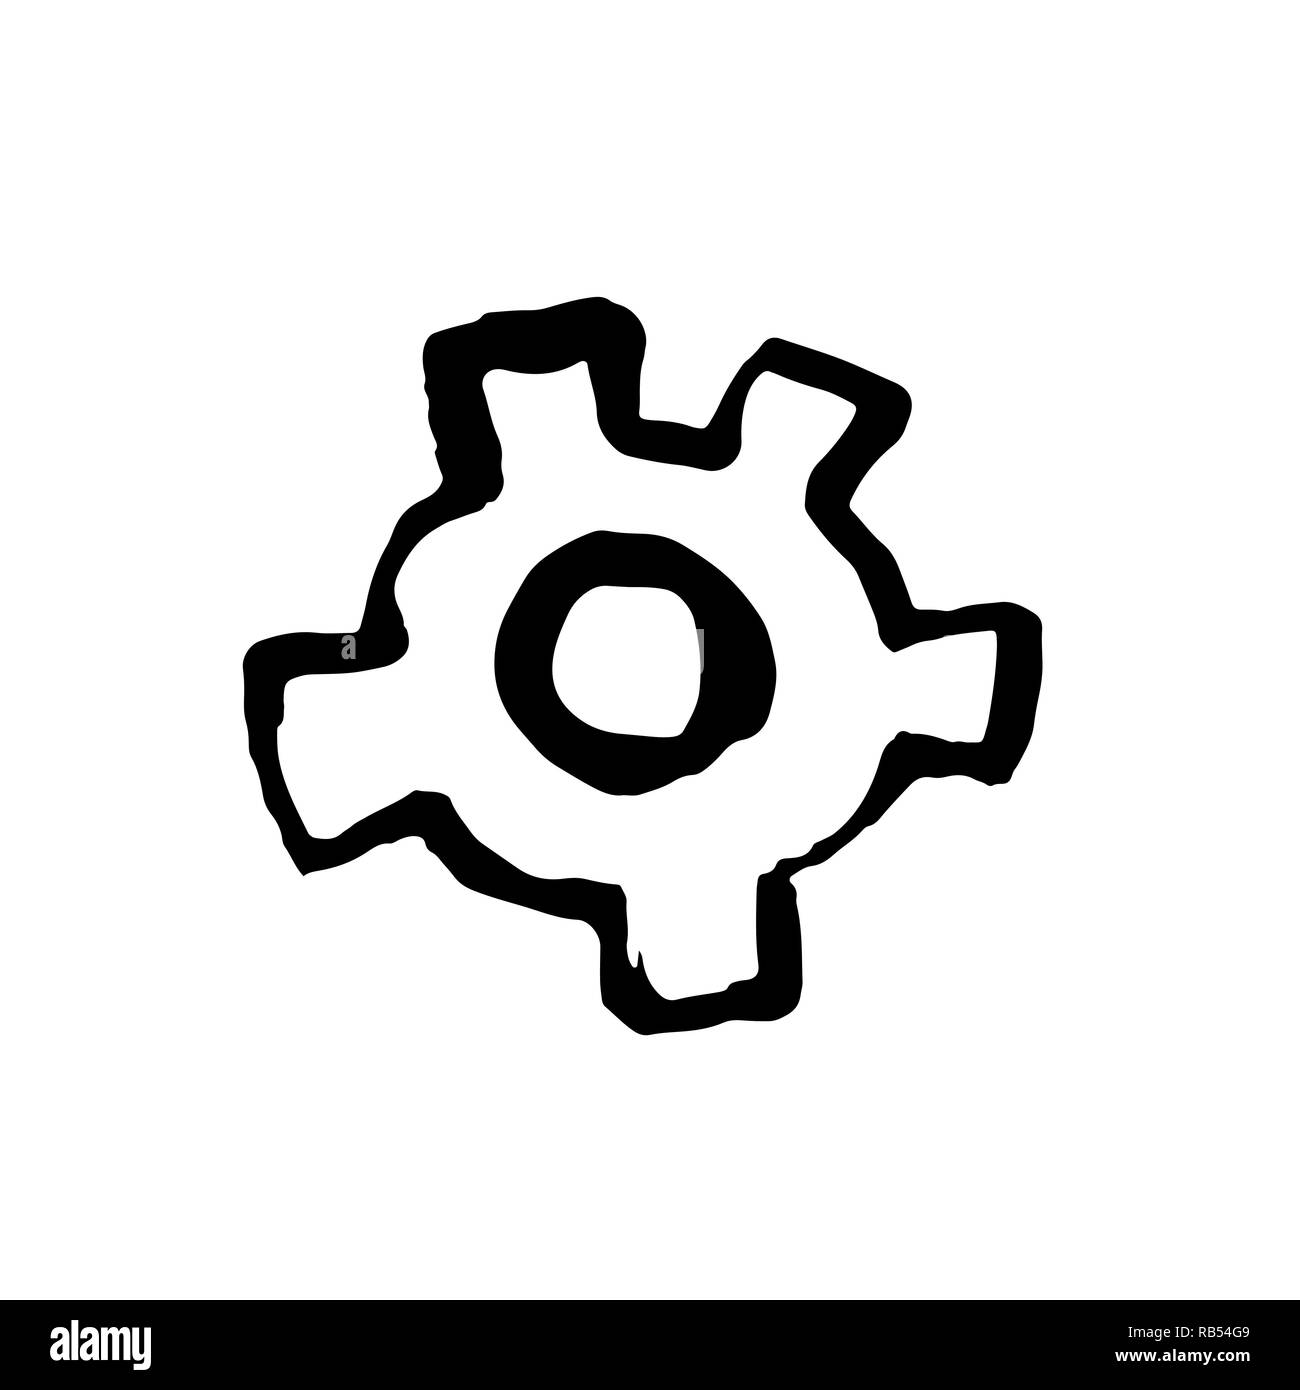 Gear grunge icon. Vector illustration. Stock Vector